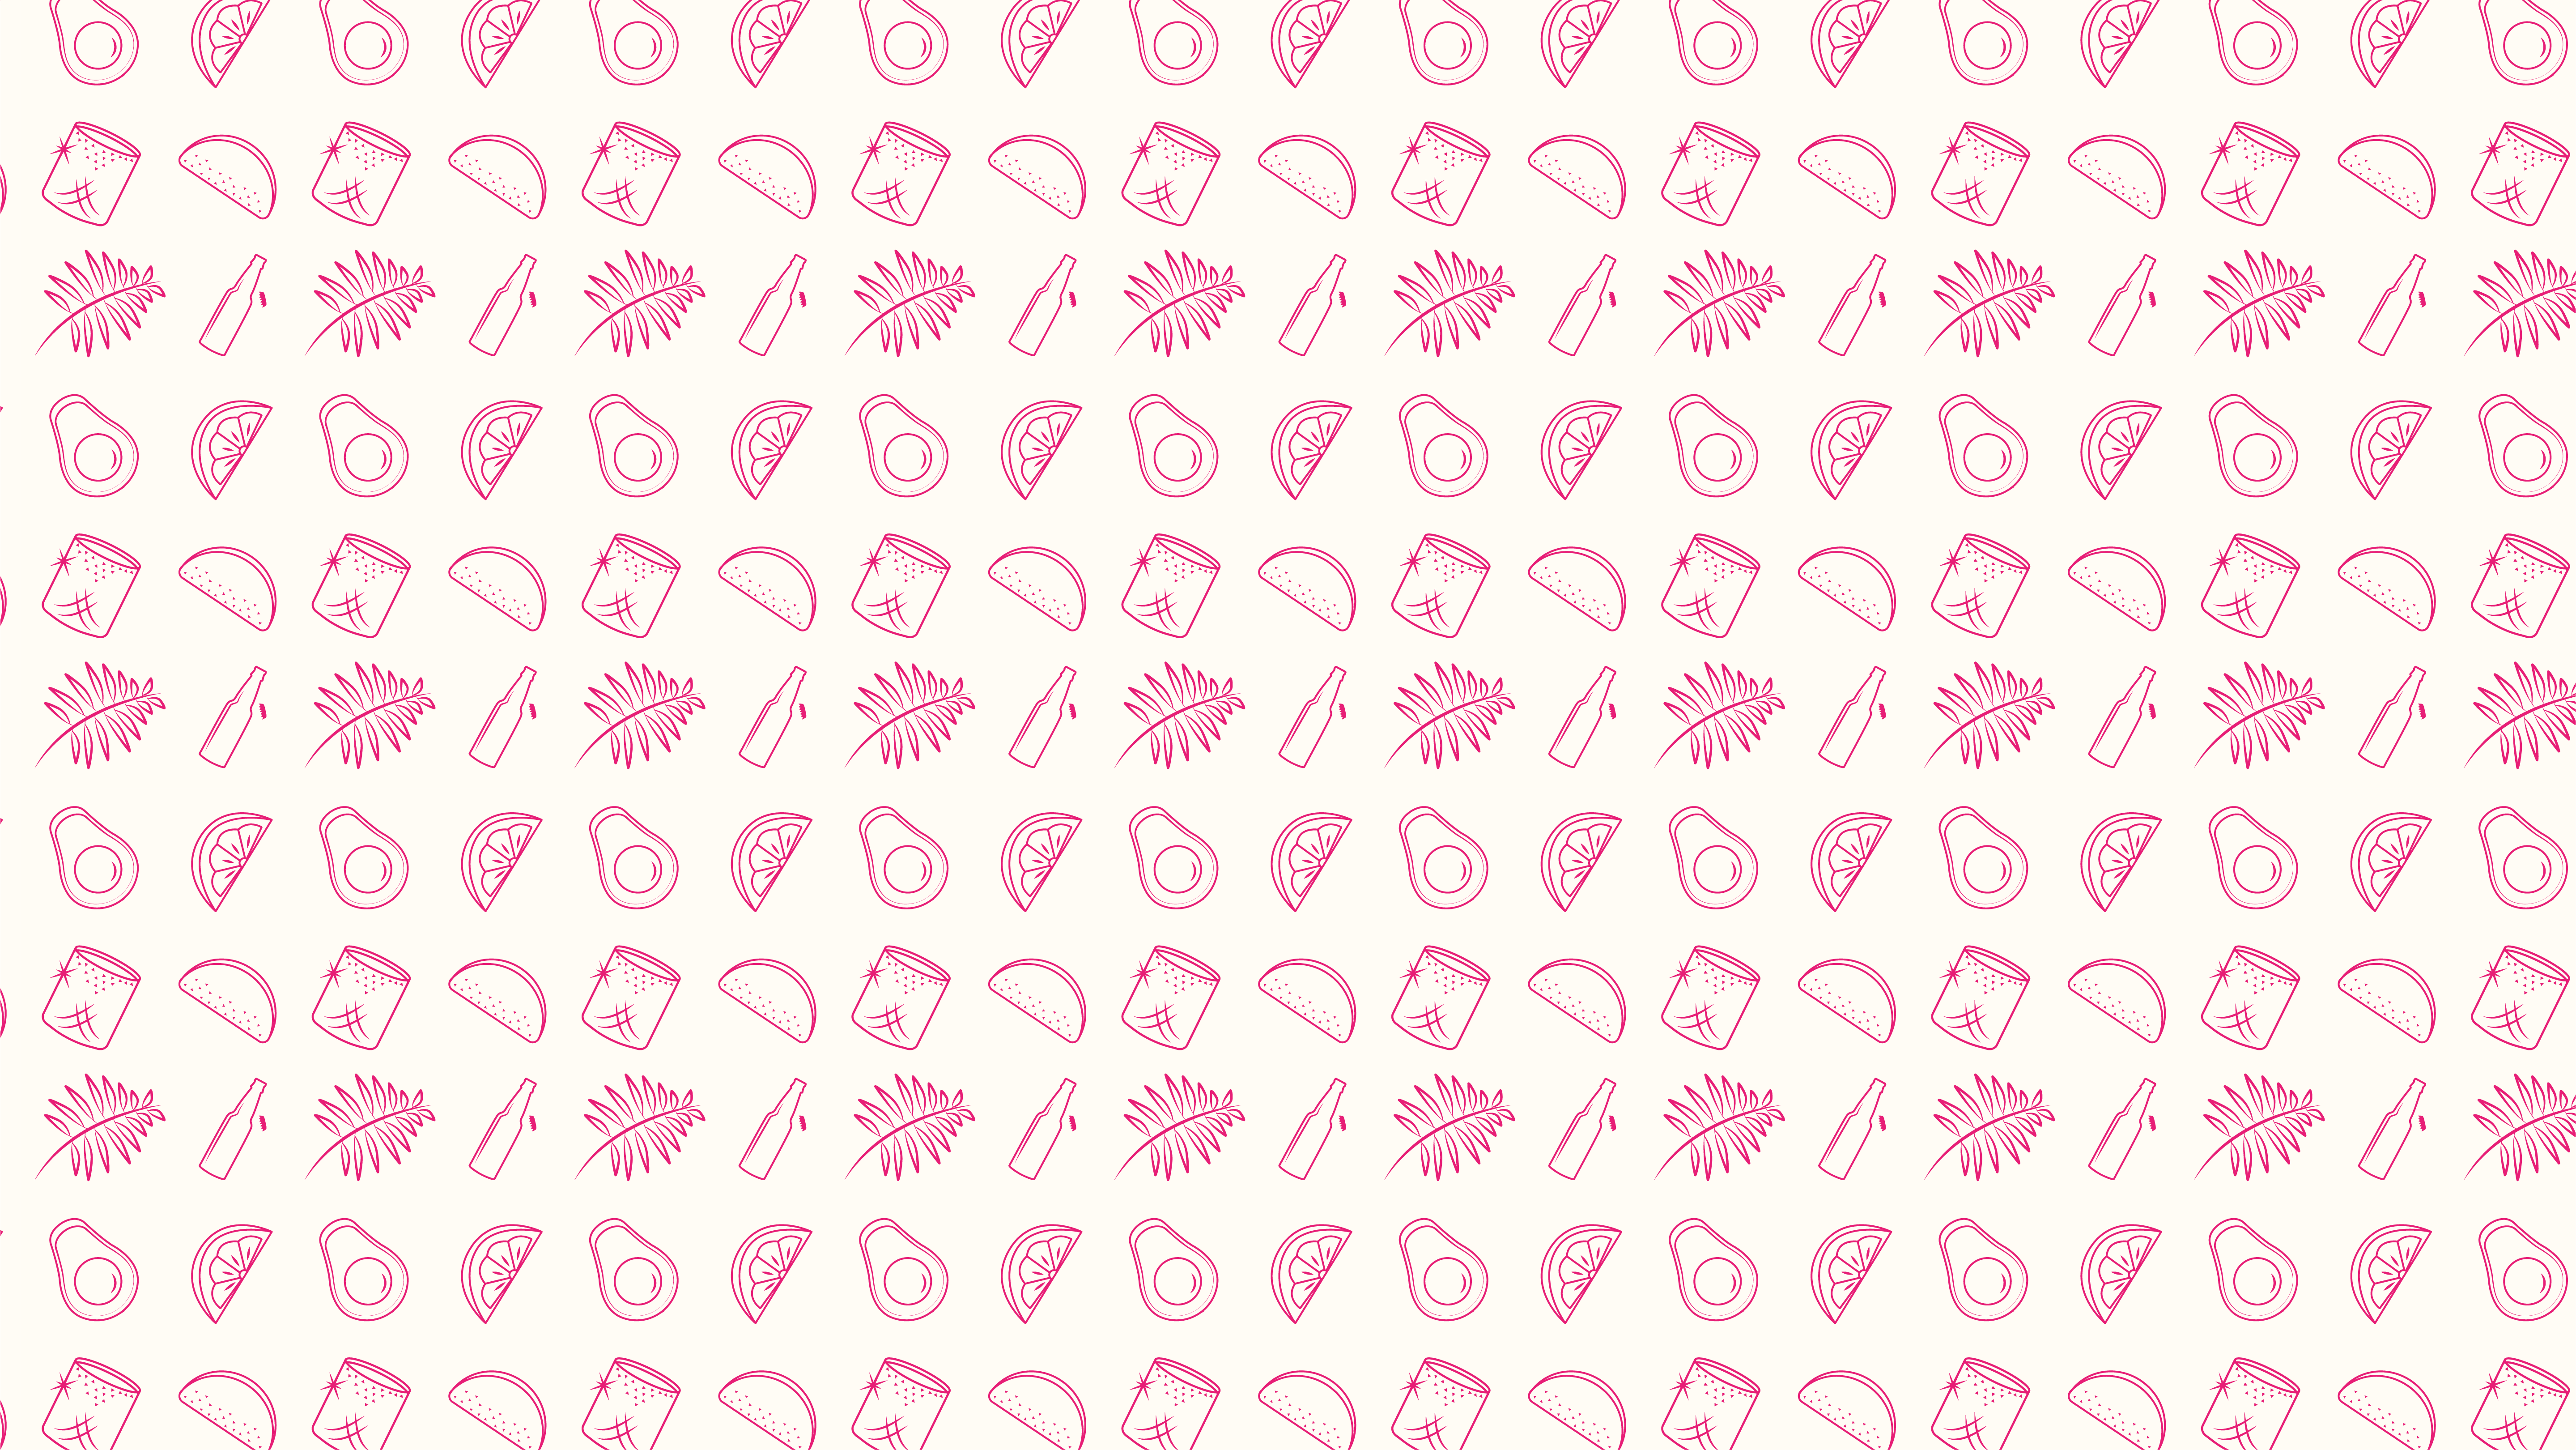 PURALIMA branded pattern in pink